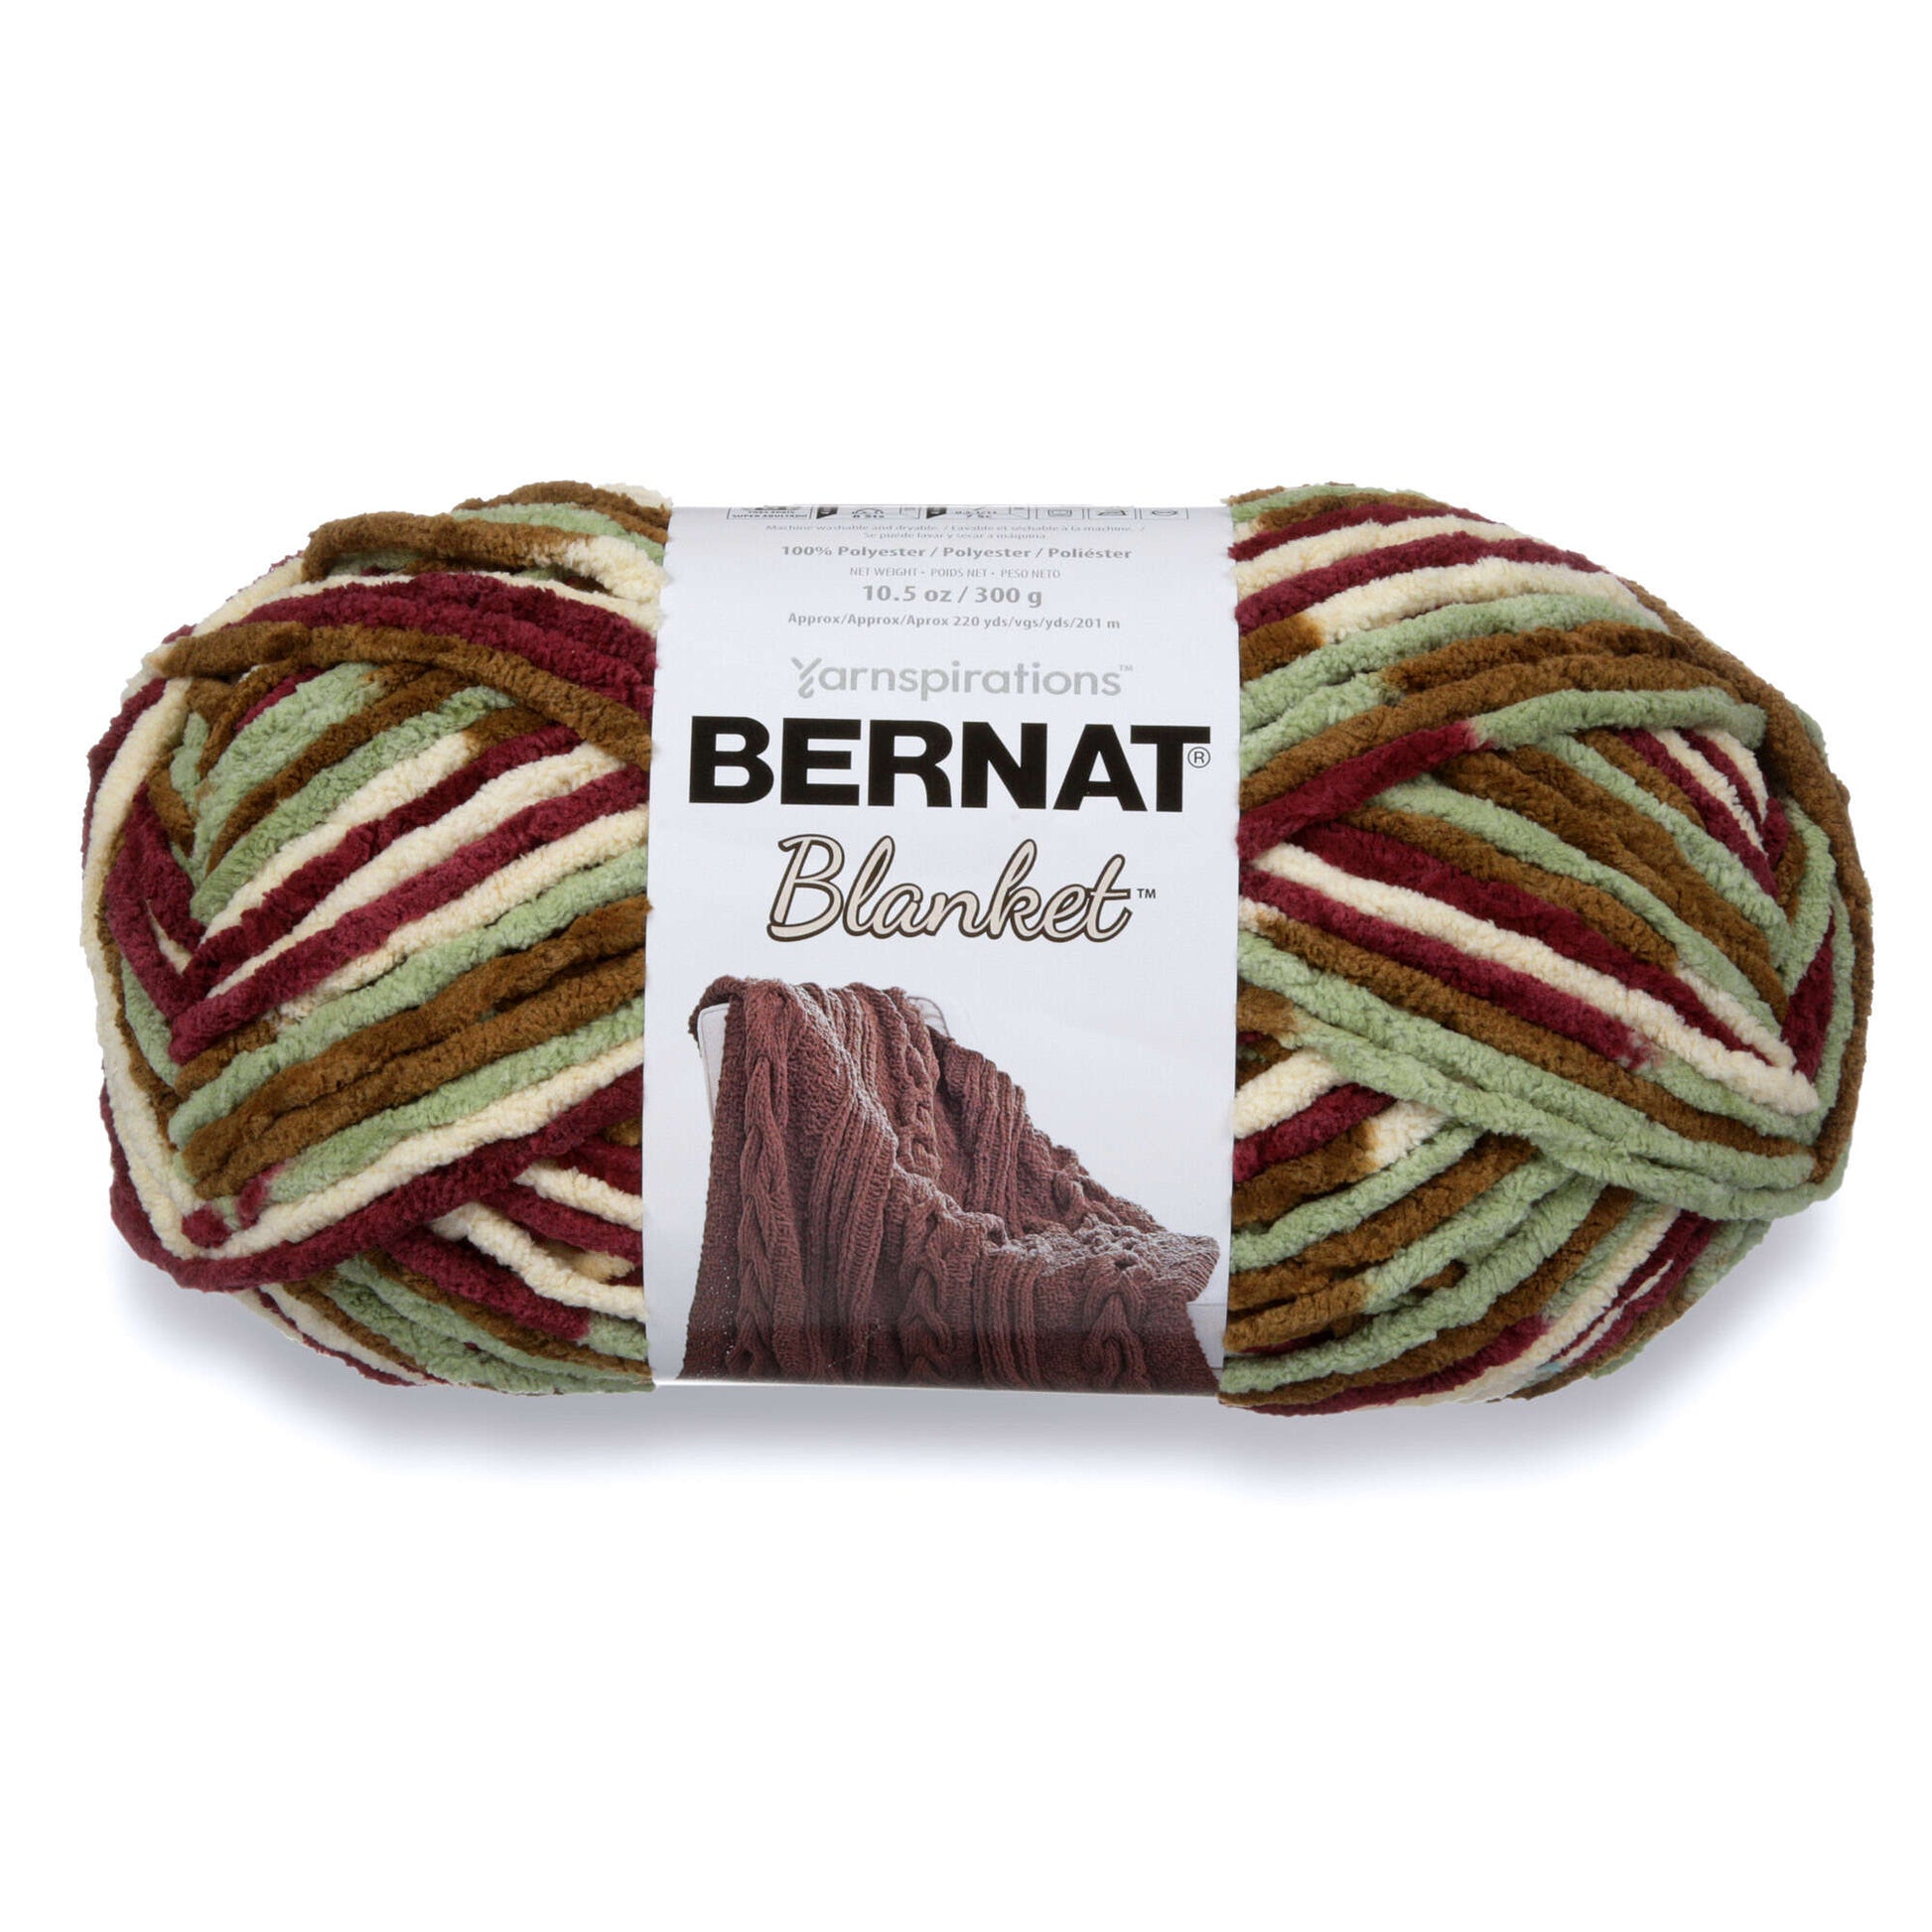 Bernat Blanket Yarn (300g/10.5oz) Plum Fields